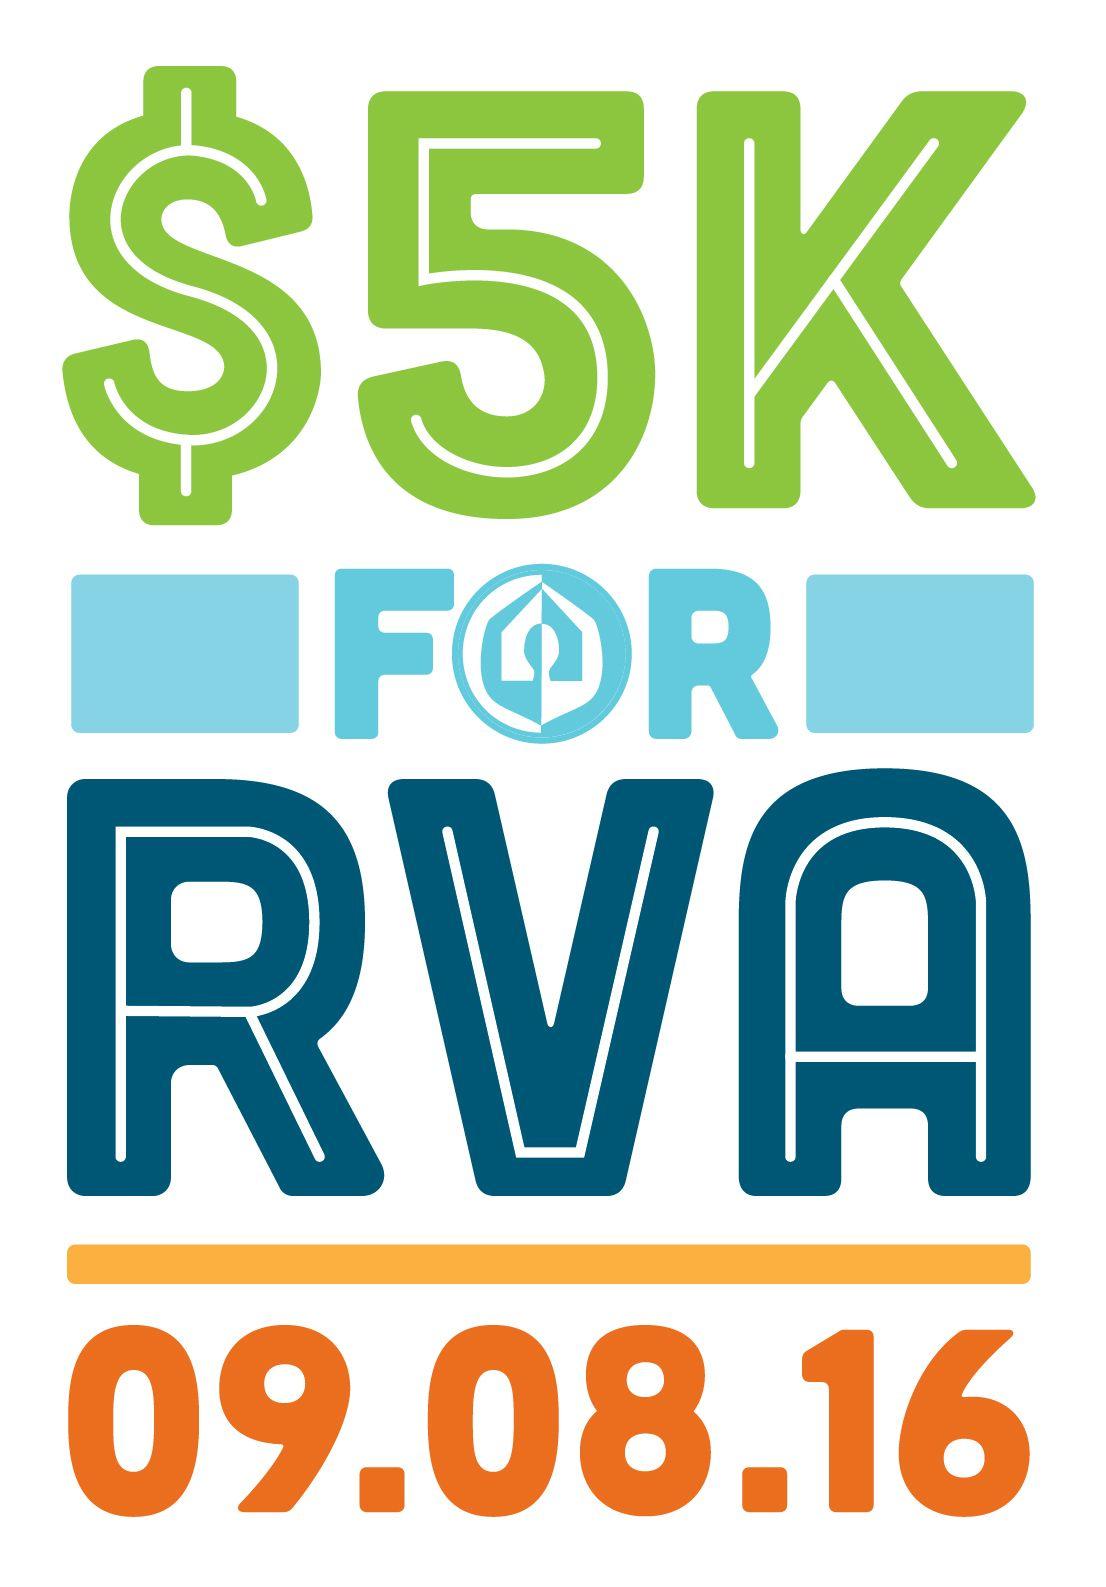 RVA Logo - 5k For Rva Logo. Better Housing Coalition